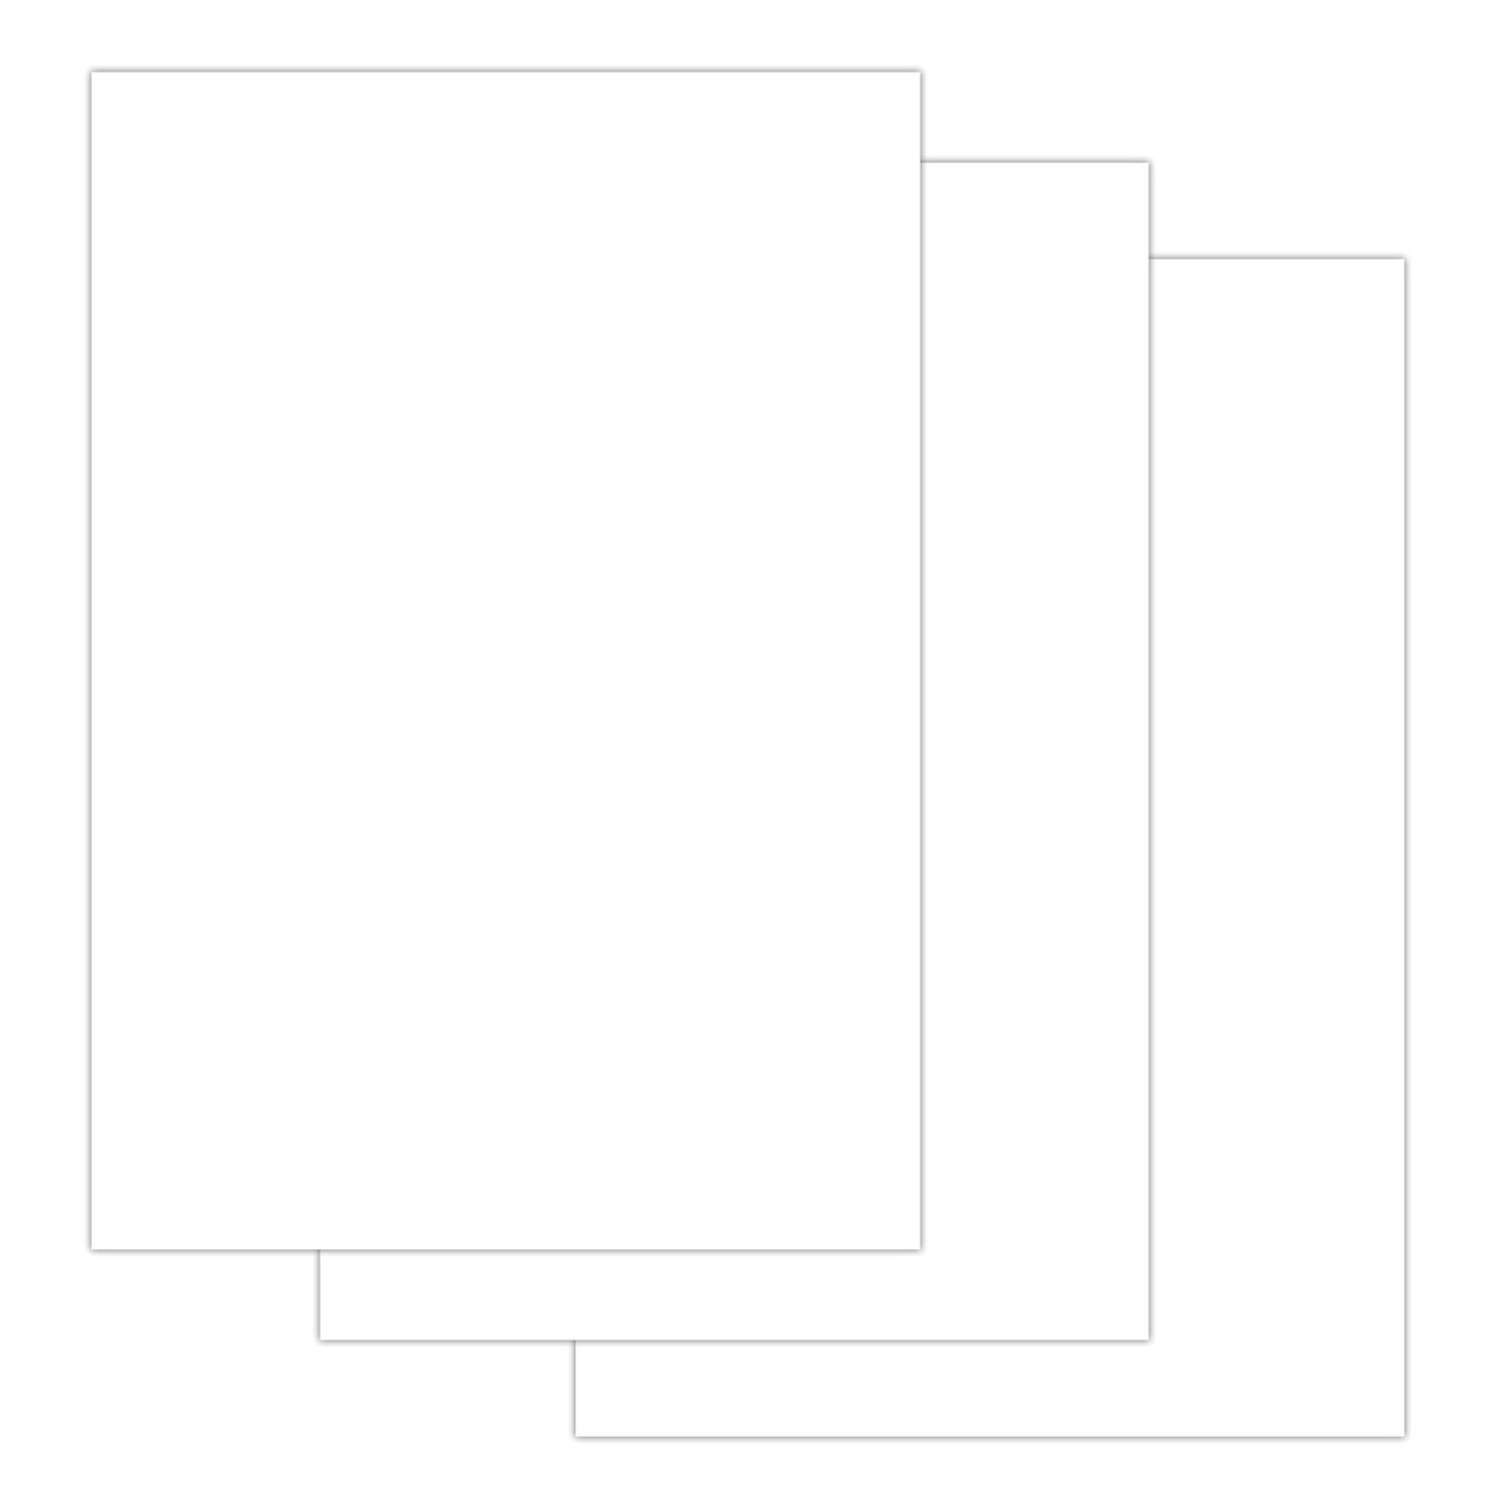 Бумага для черчения Brauberg большого формата А4 2 папки по 24 листа 200 г/м2 ватман Гознак - фото 3